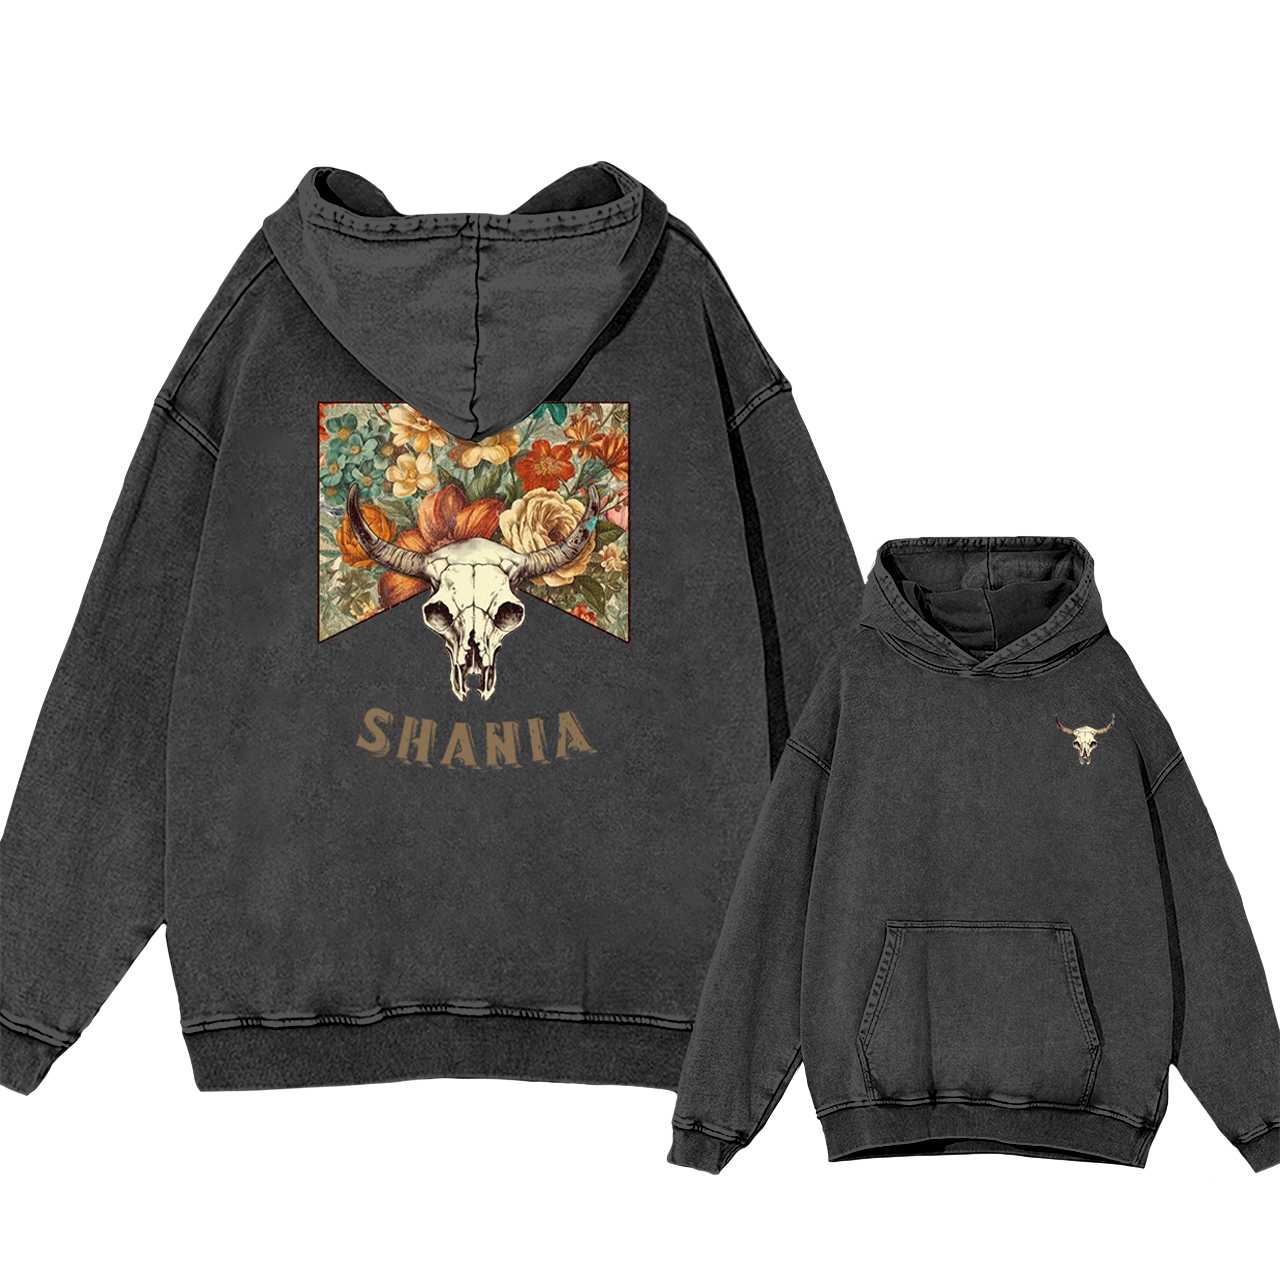 Shania 90's Country Music Garment-Dye Hoodies